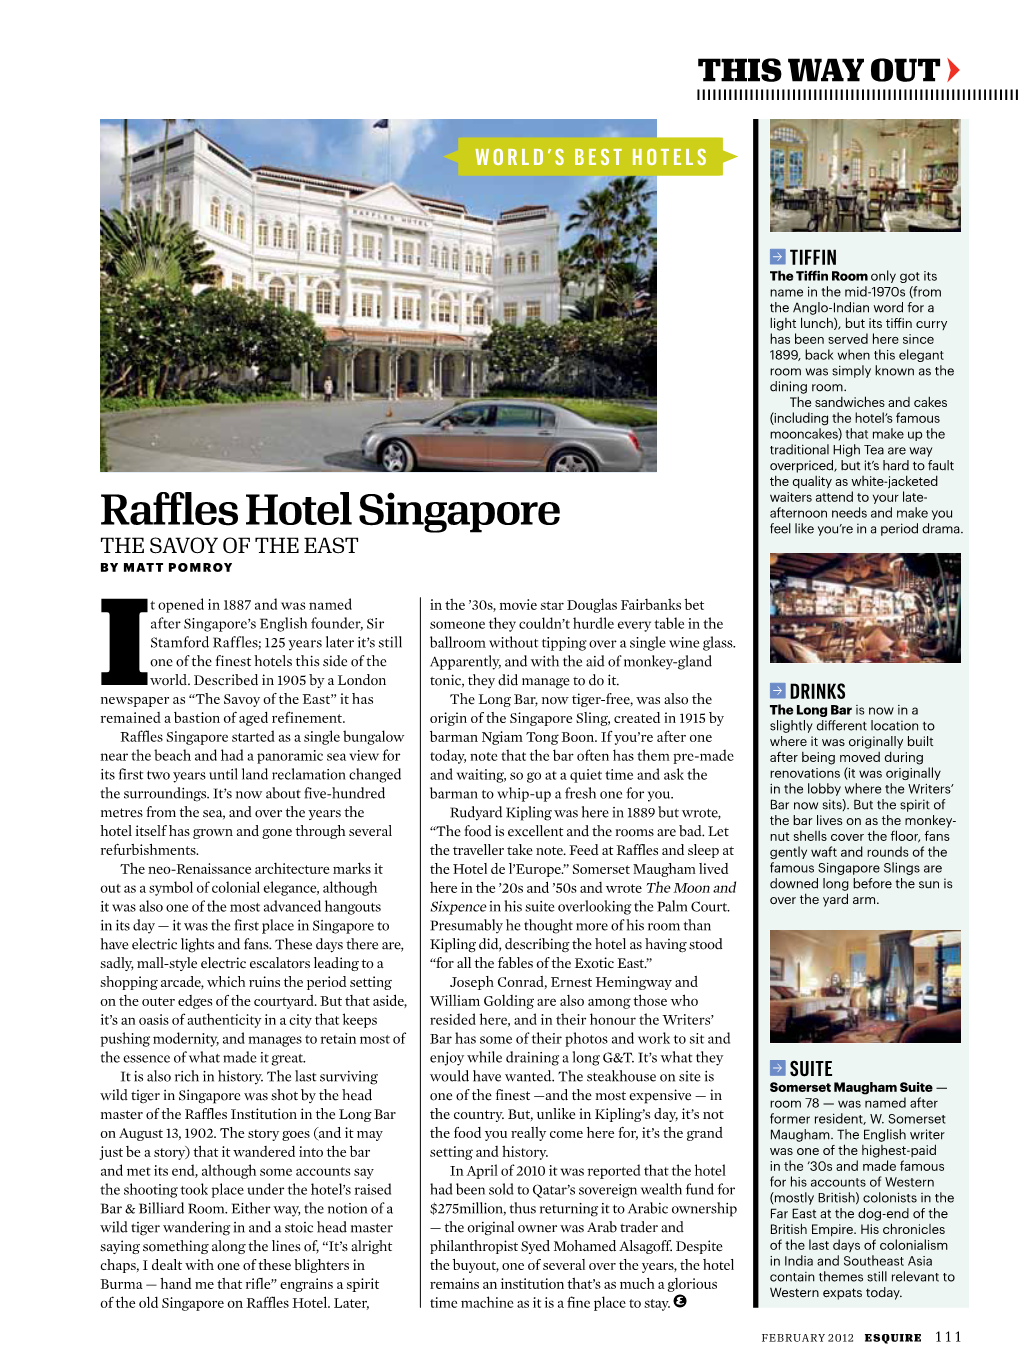 Raffles Hotel Singapore Feel Like You’Re in a Period Drama